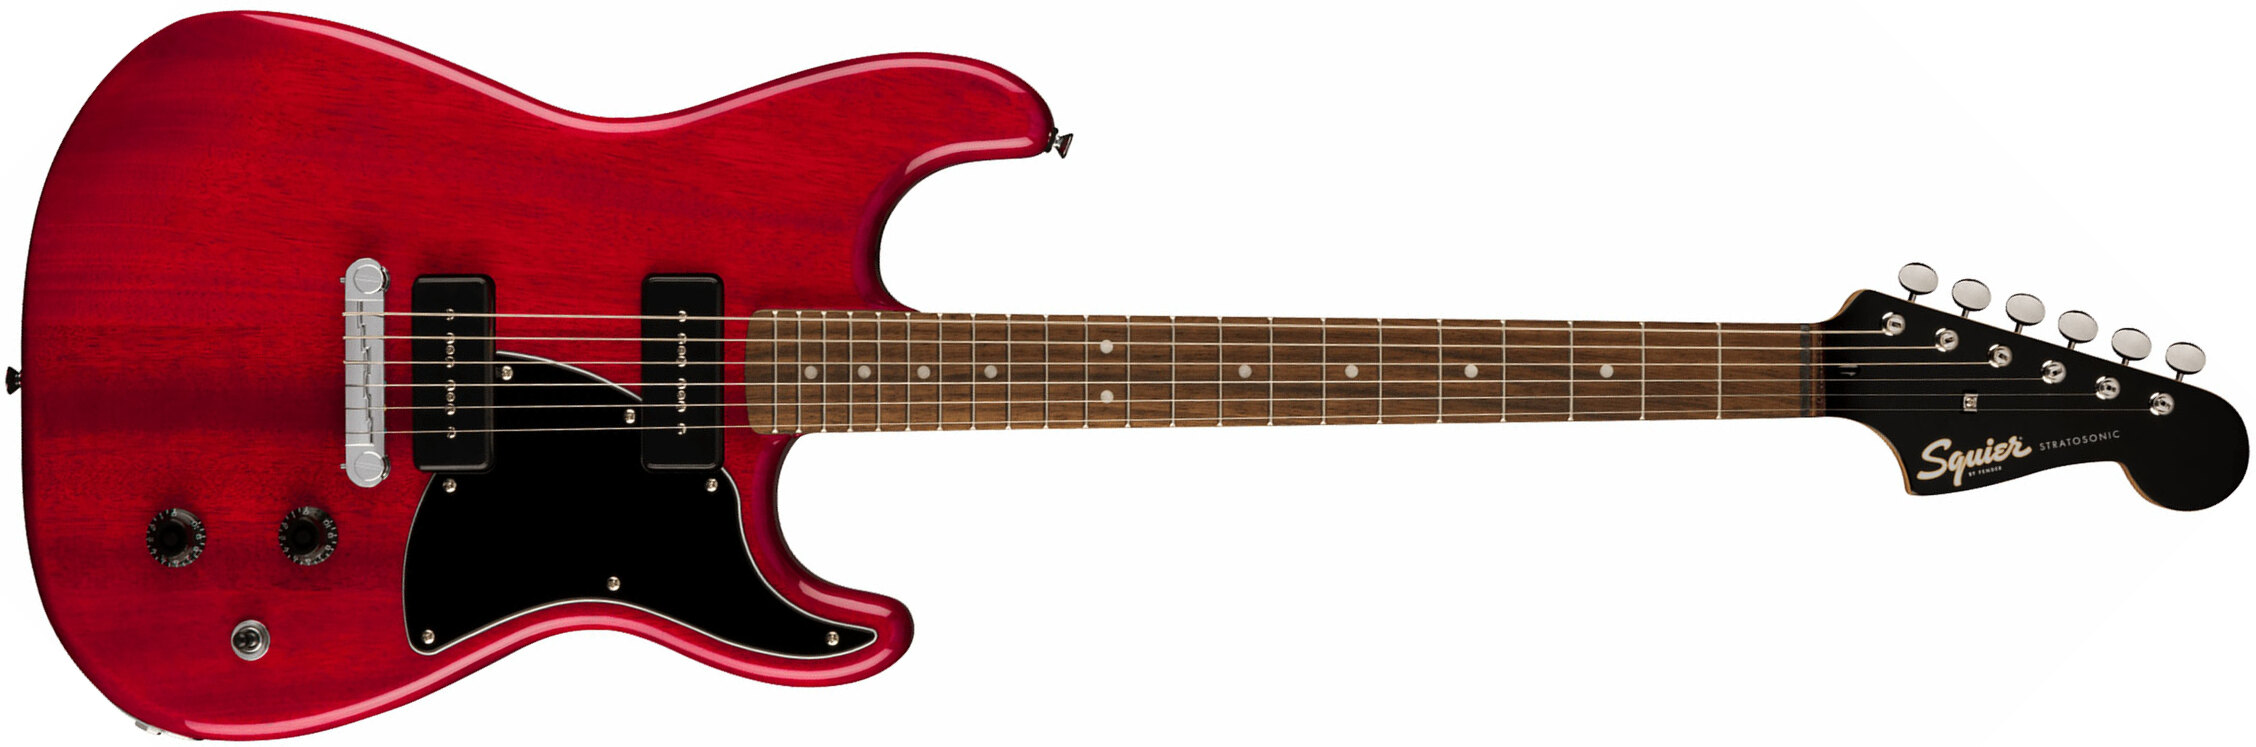 Squier Strat-o-sonic Paranormal 2s P90 Ht Lau - Crimson Red Transparent - Str shape electric guitar - Main picture